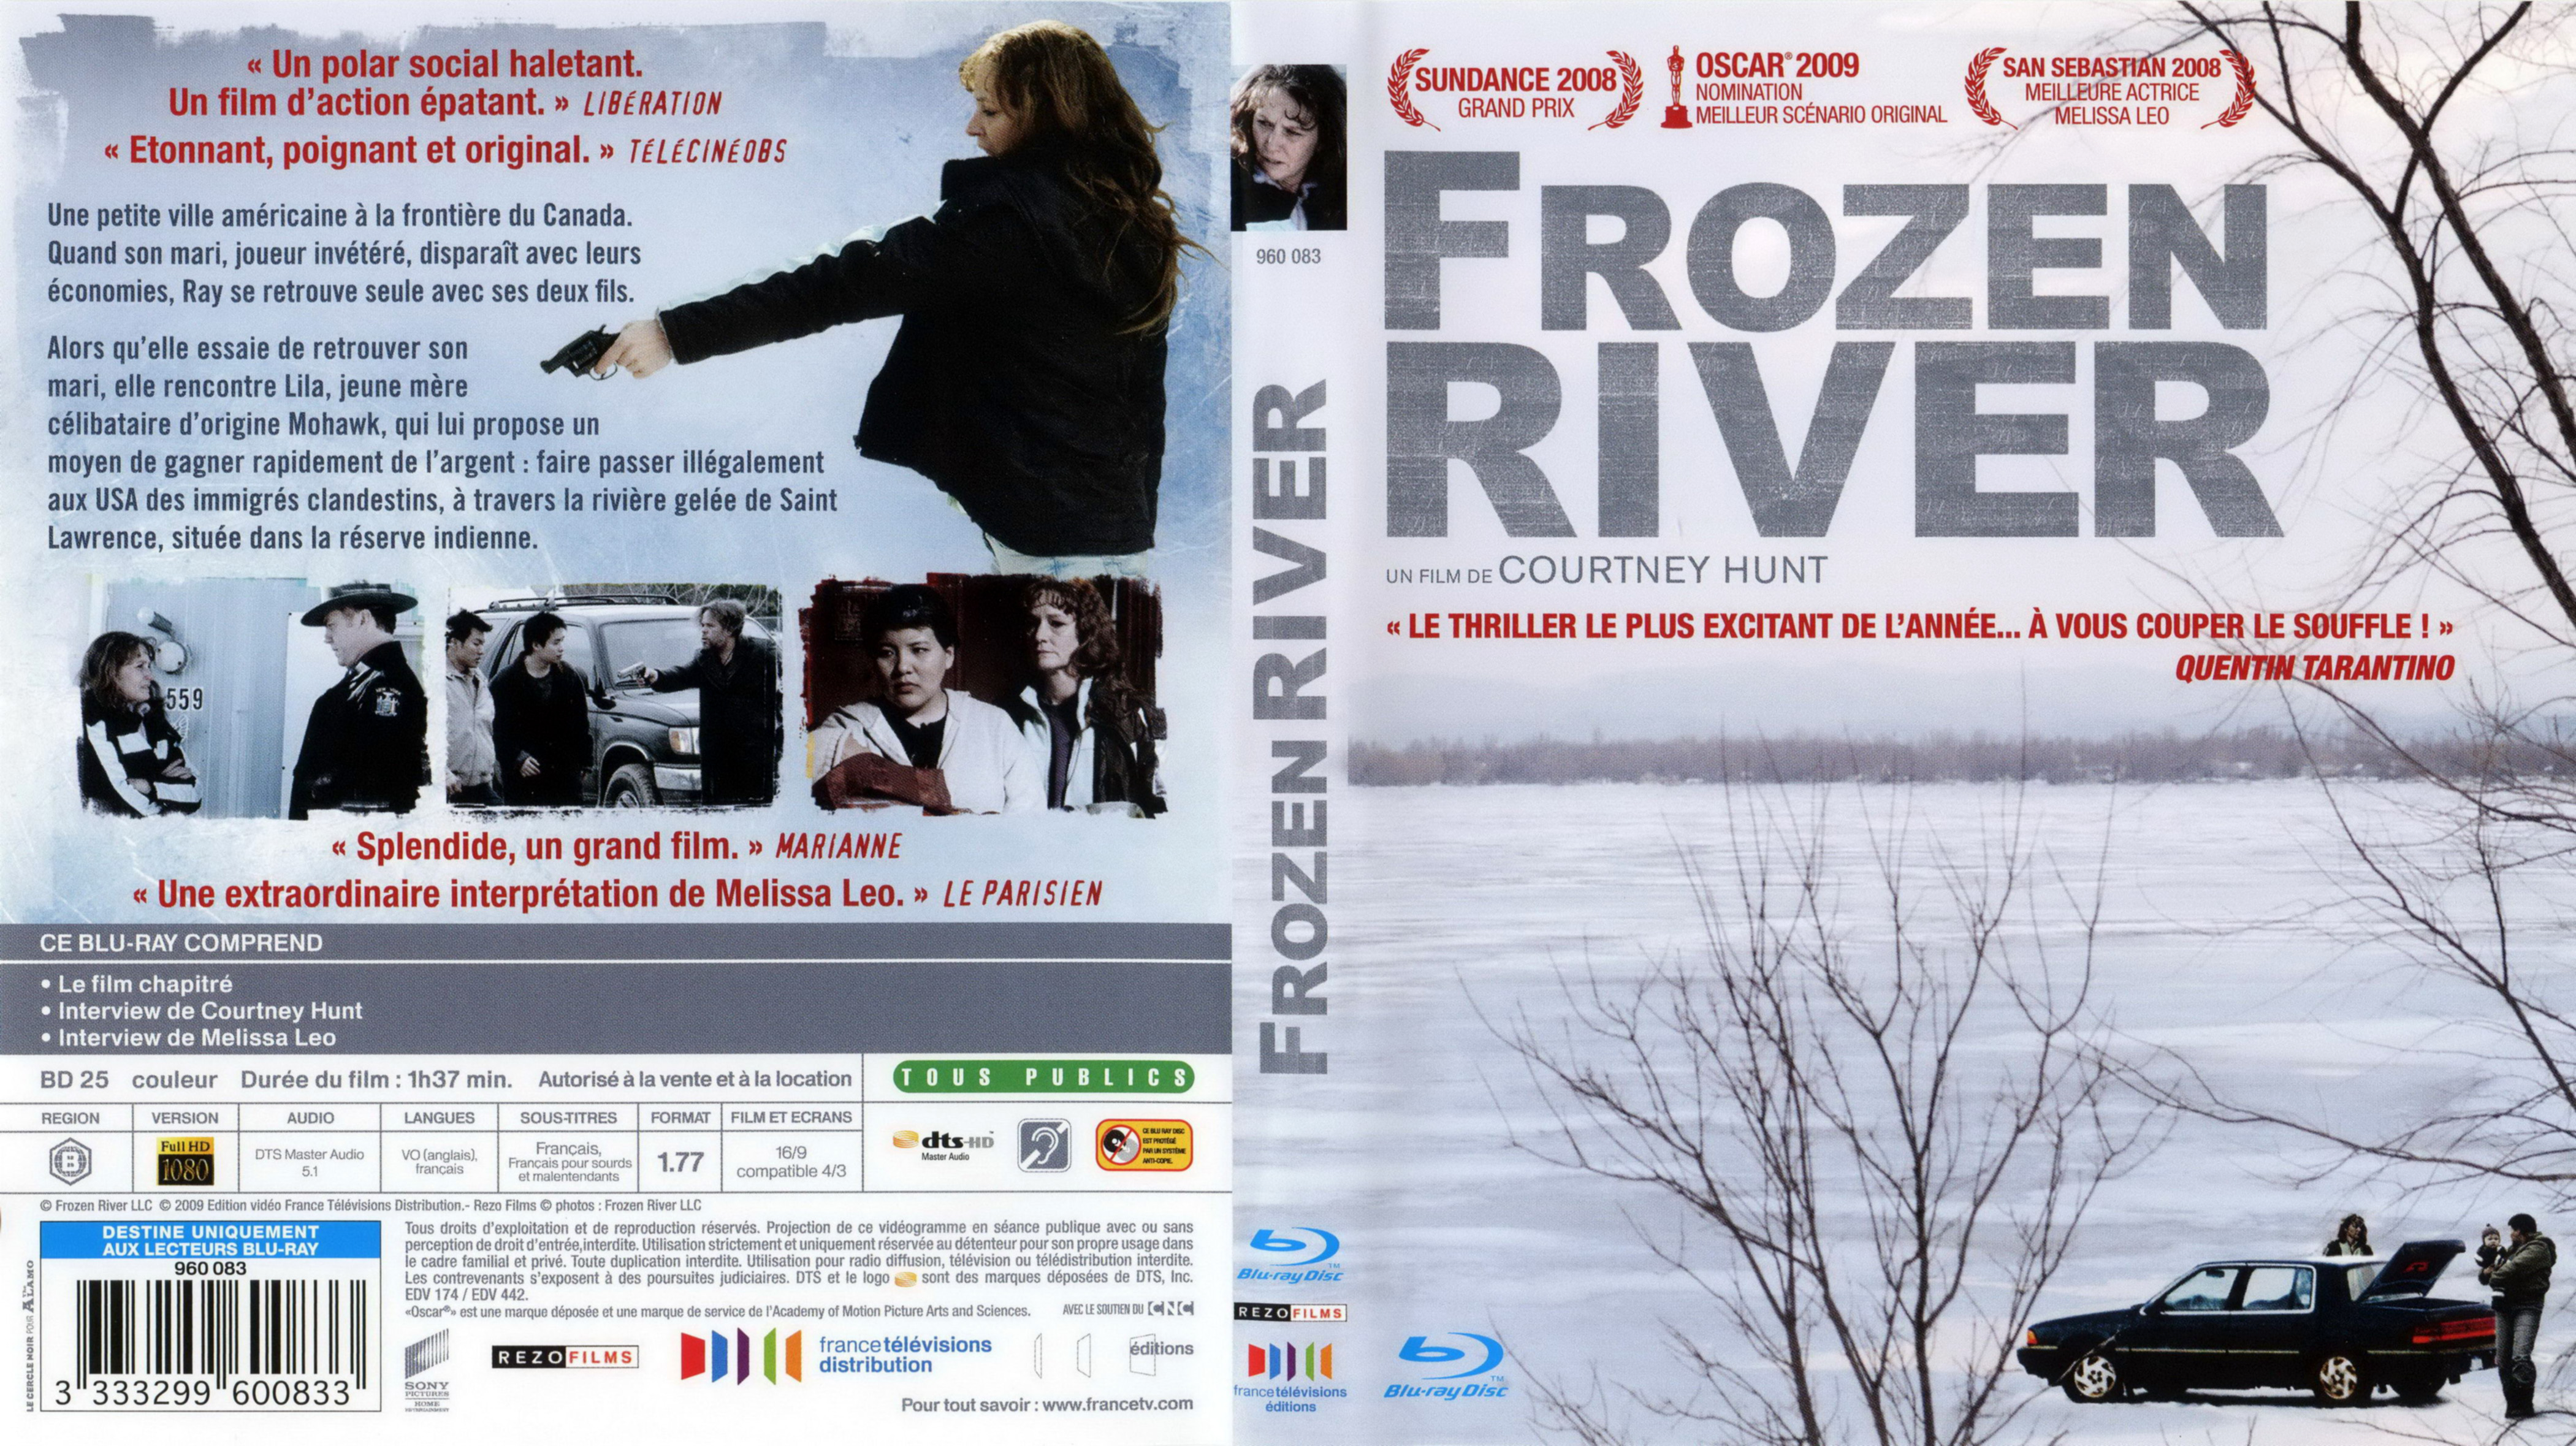 Jaquette DVD Frozen river (BLU-RAY)